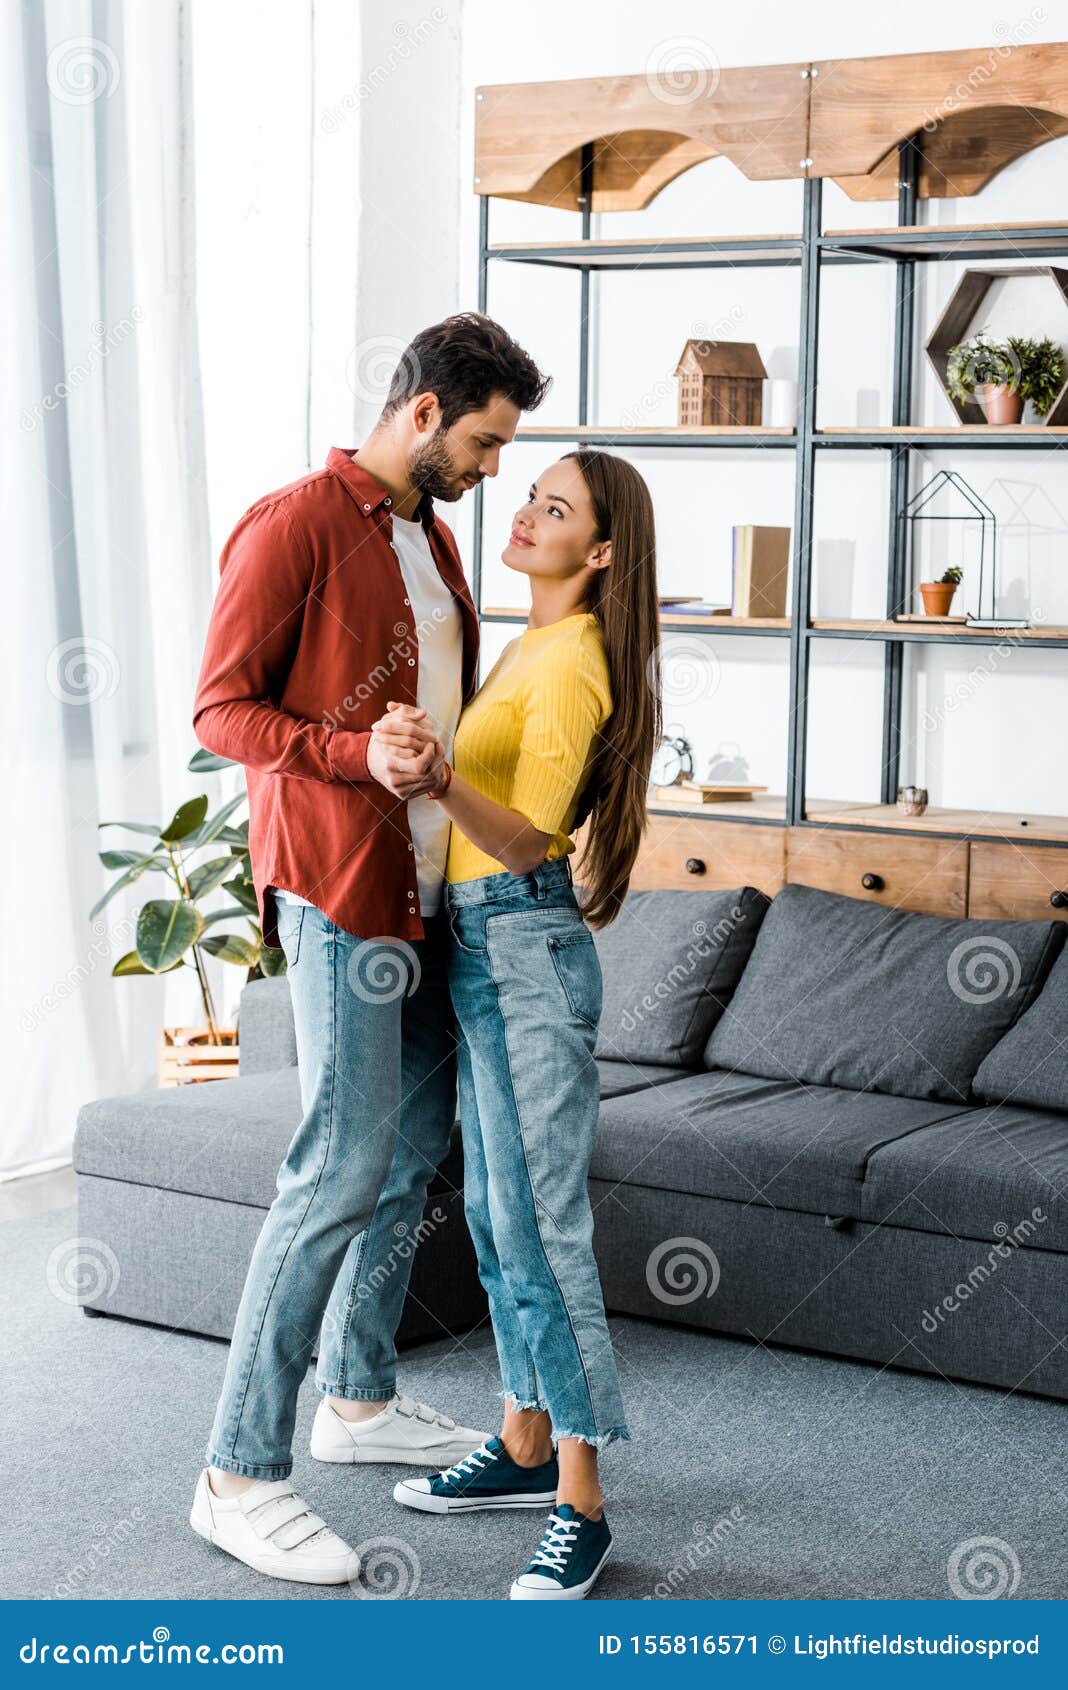 Girl gives boyfriend dance pic